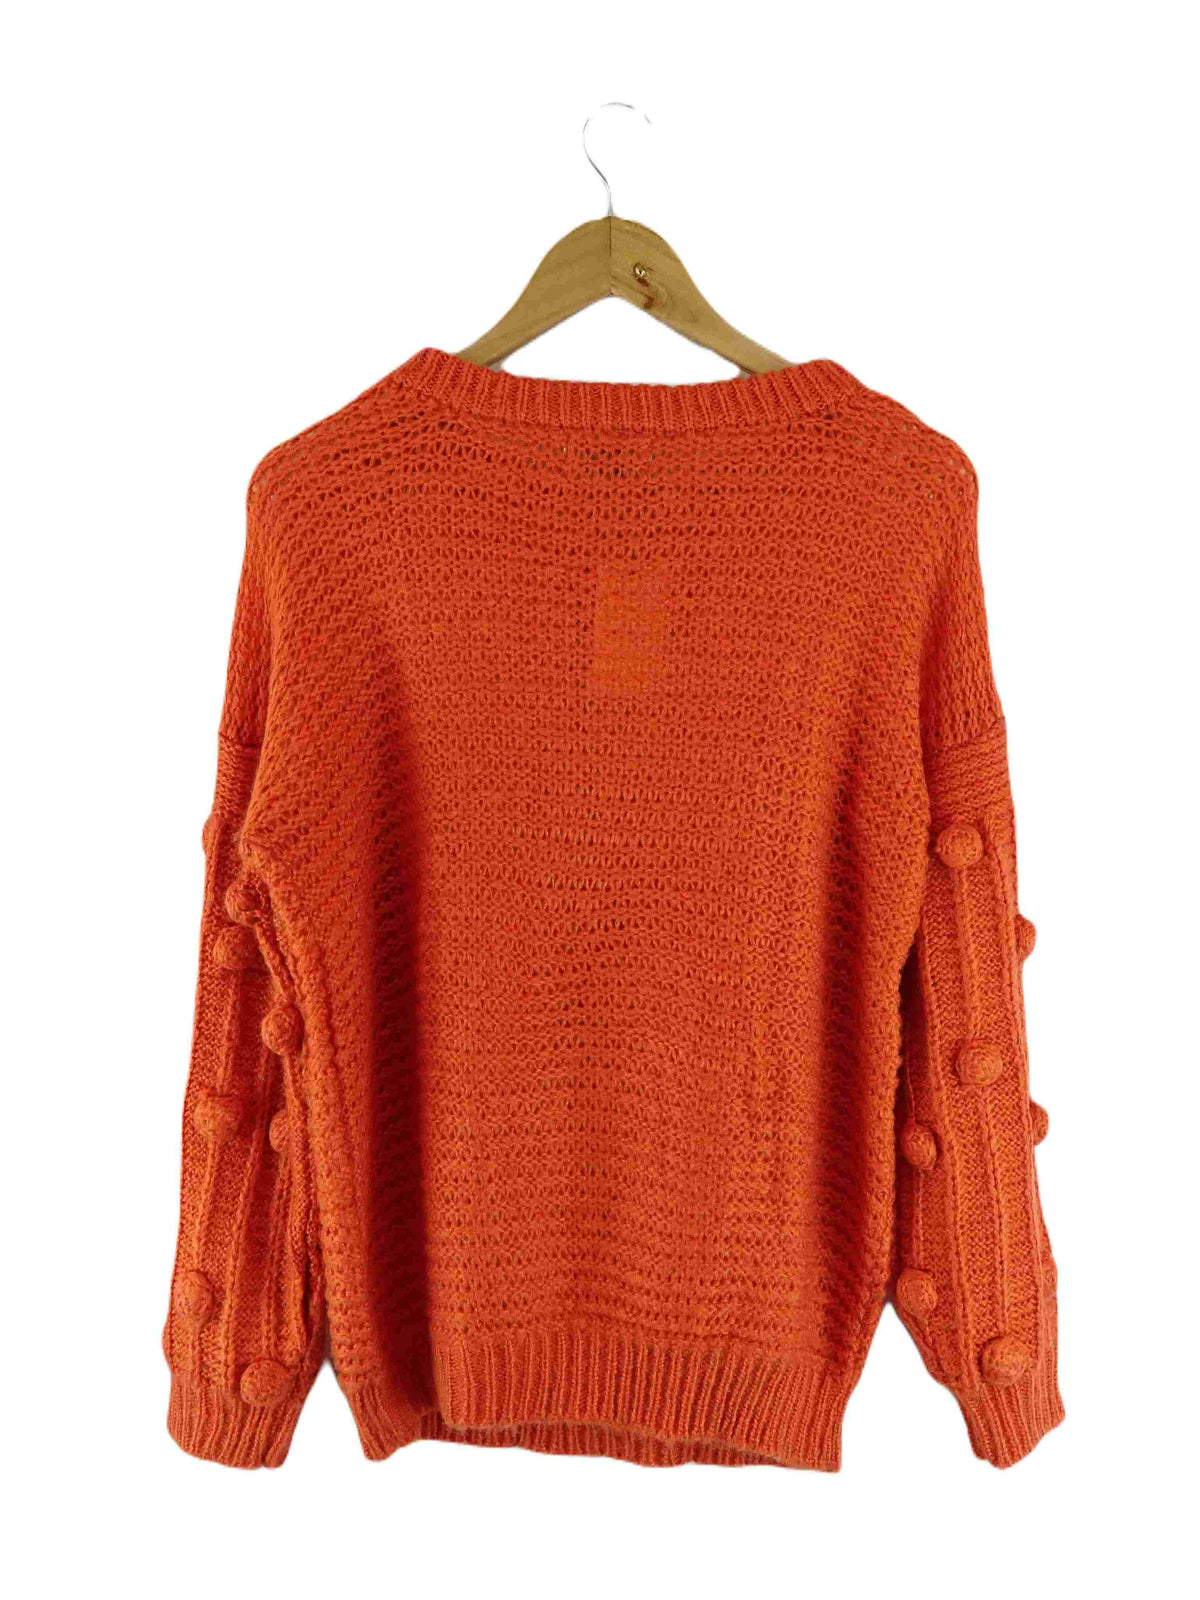 Lilya Orange Knit Sweater M